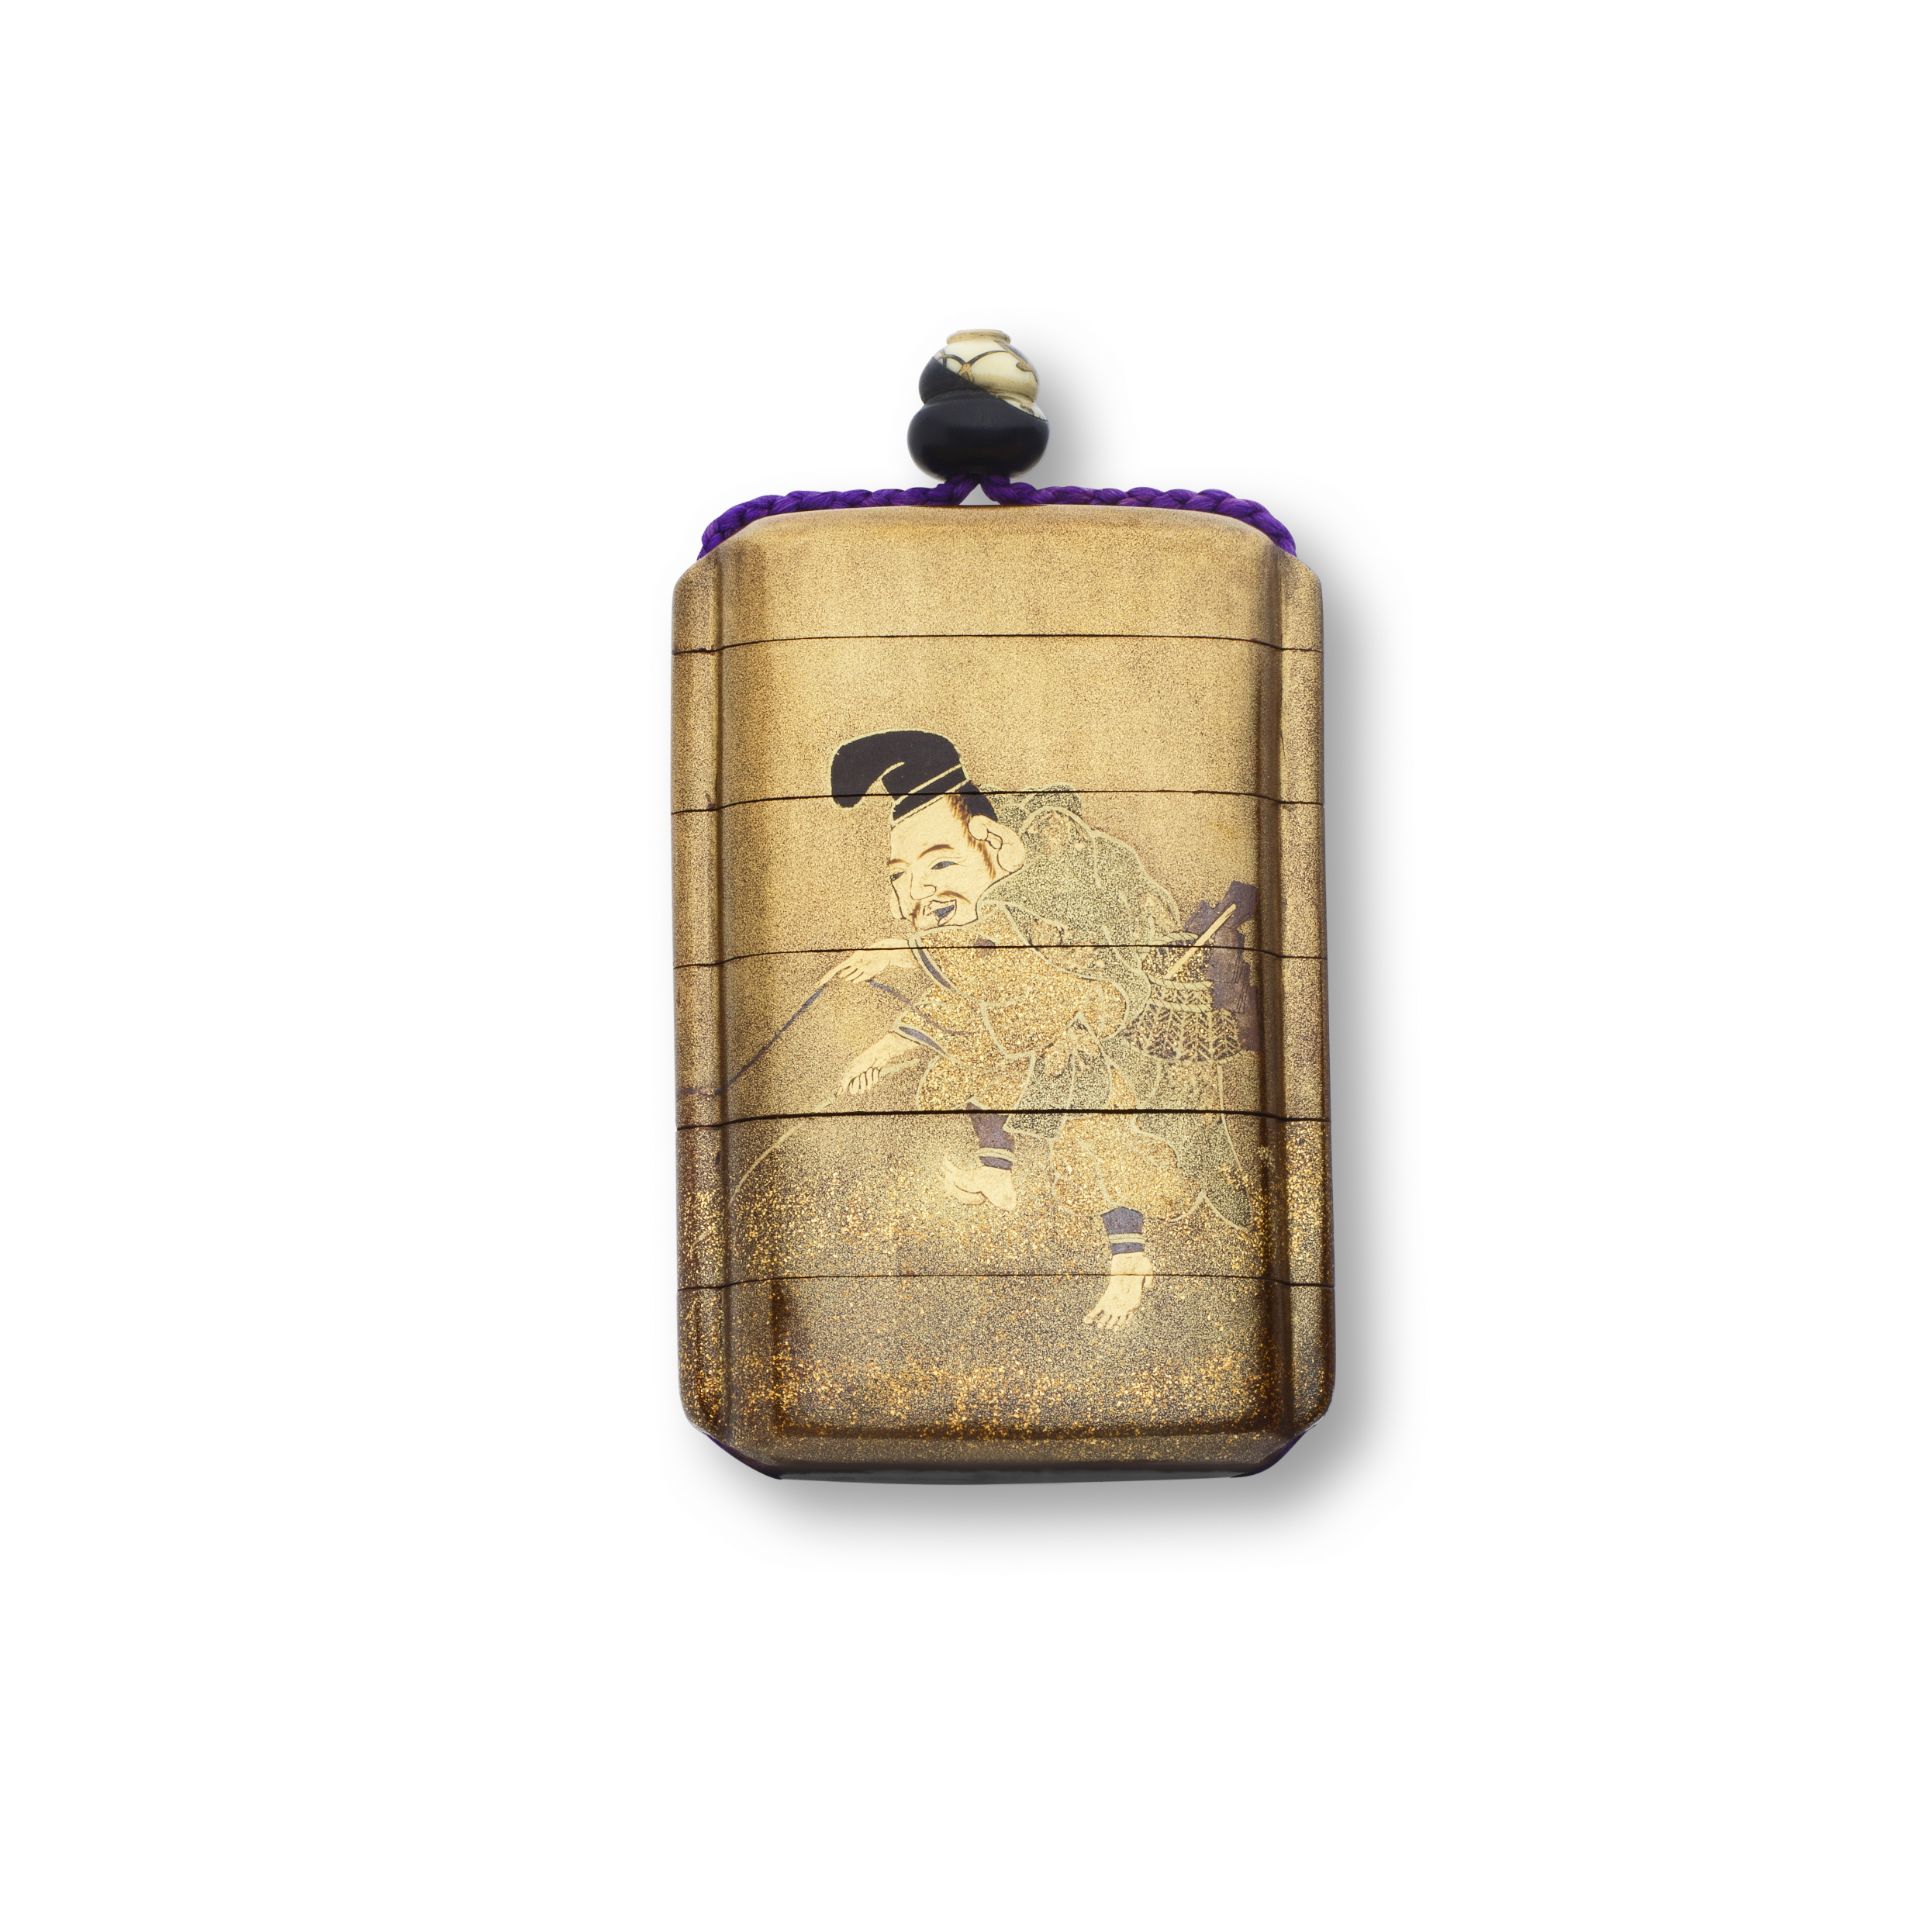 HARA YOYUSAI (1772-1845/6) A Gold-Lacquer Five-Case Inro Edo period (1615-1868), mid-19th century